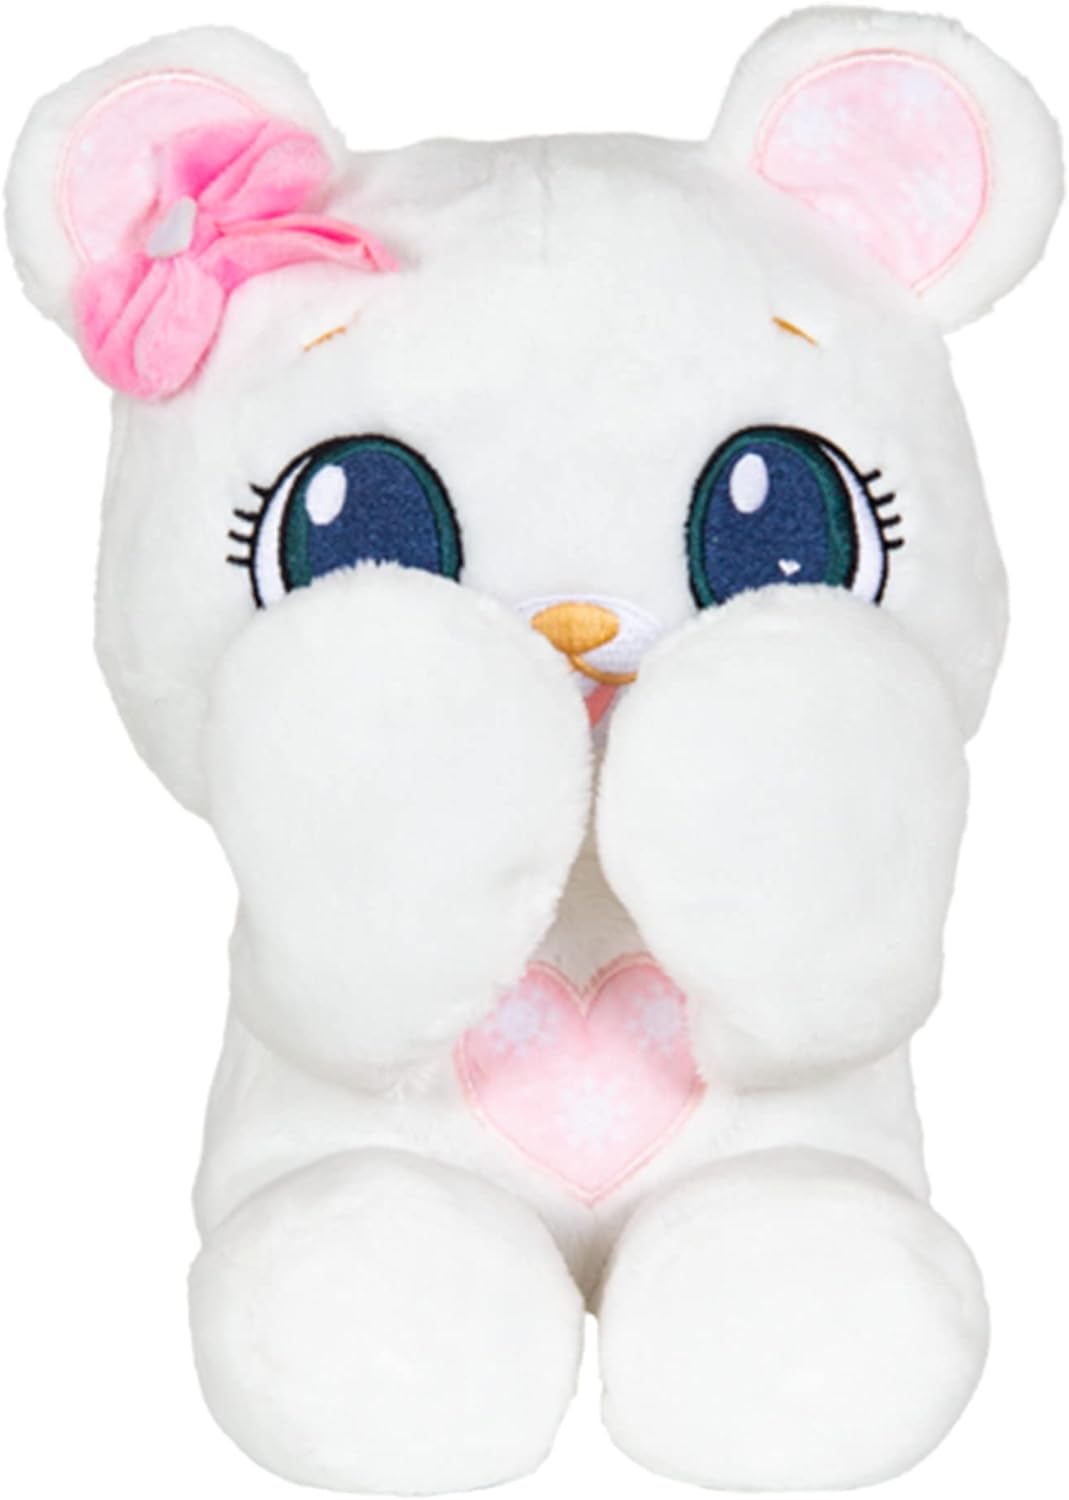 Peek-A-Boo Bear Plush - Stuffed Animal, White Bear Plush Doll - Great Gift for Kids Ages 1-3